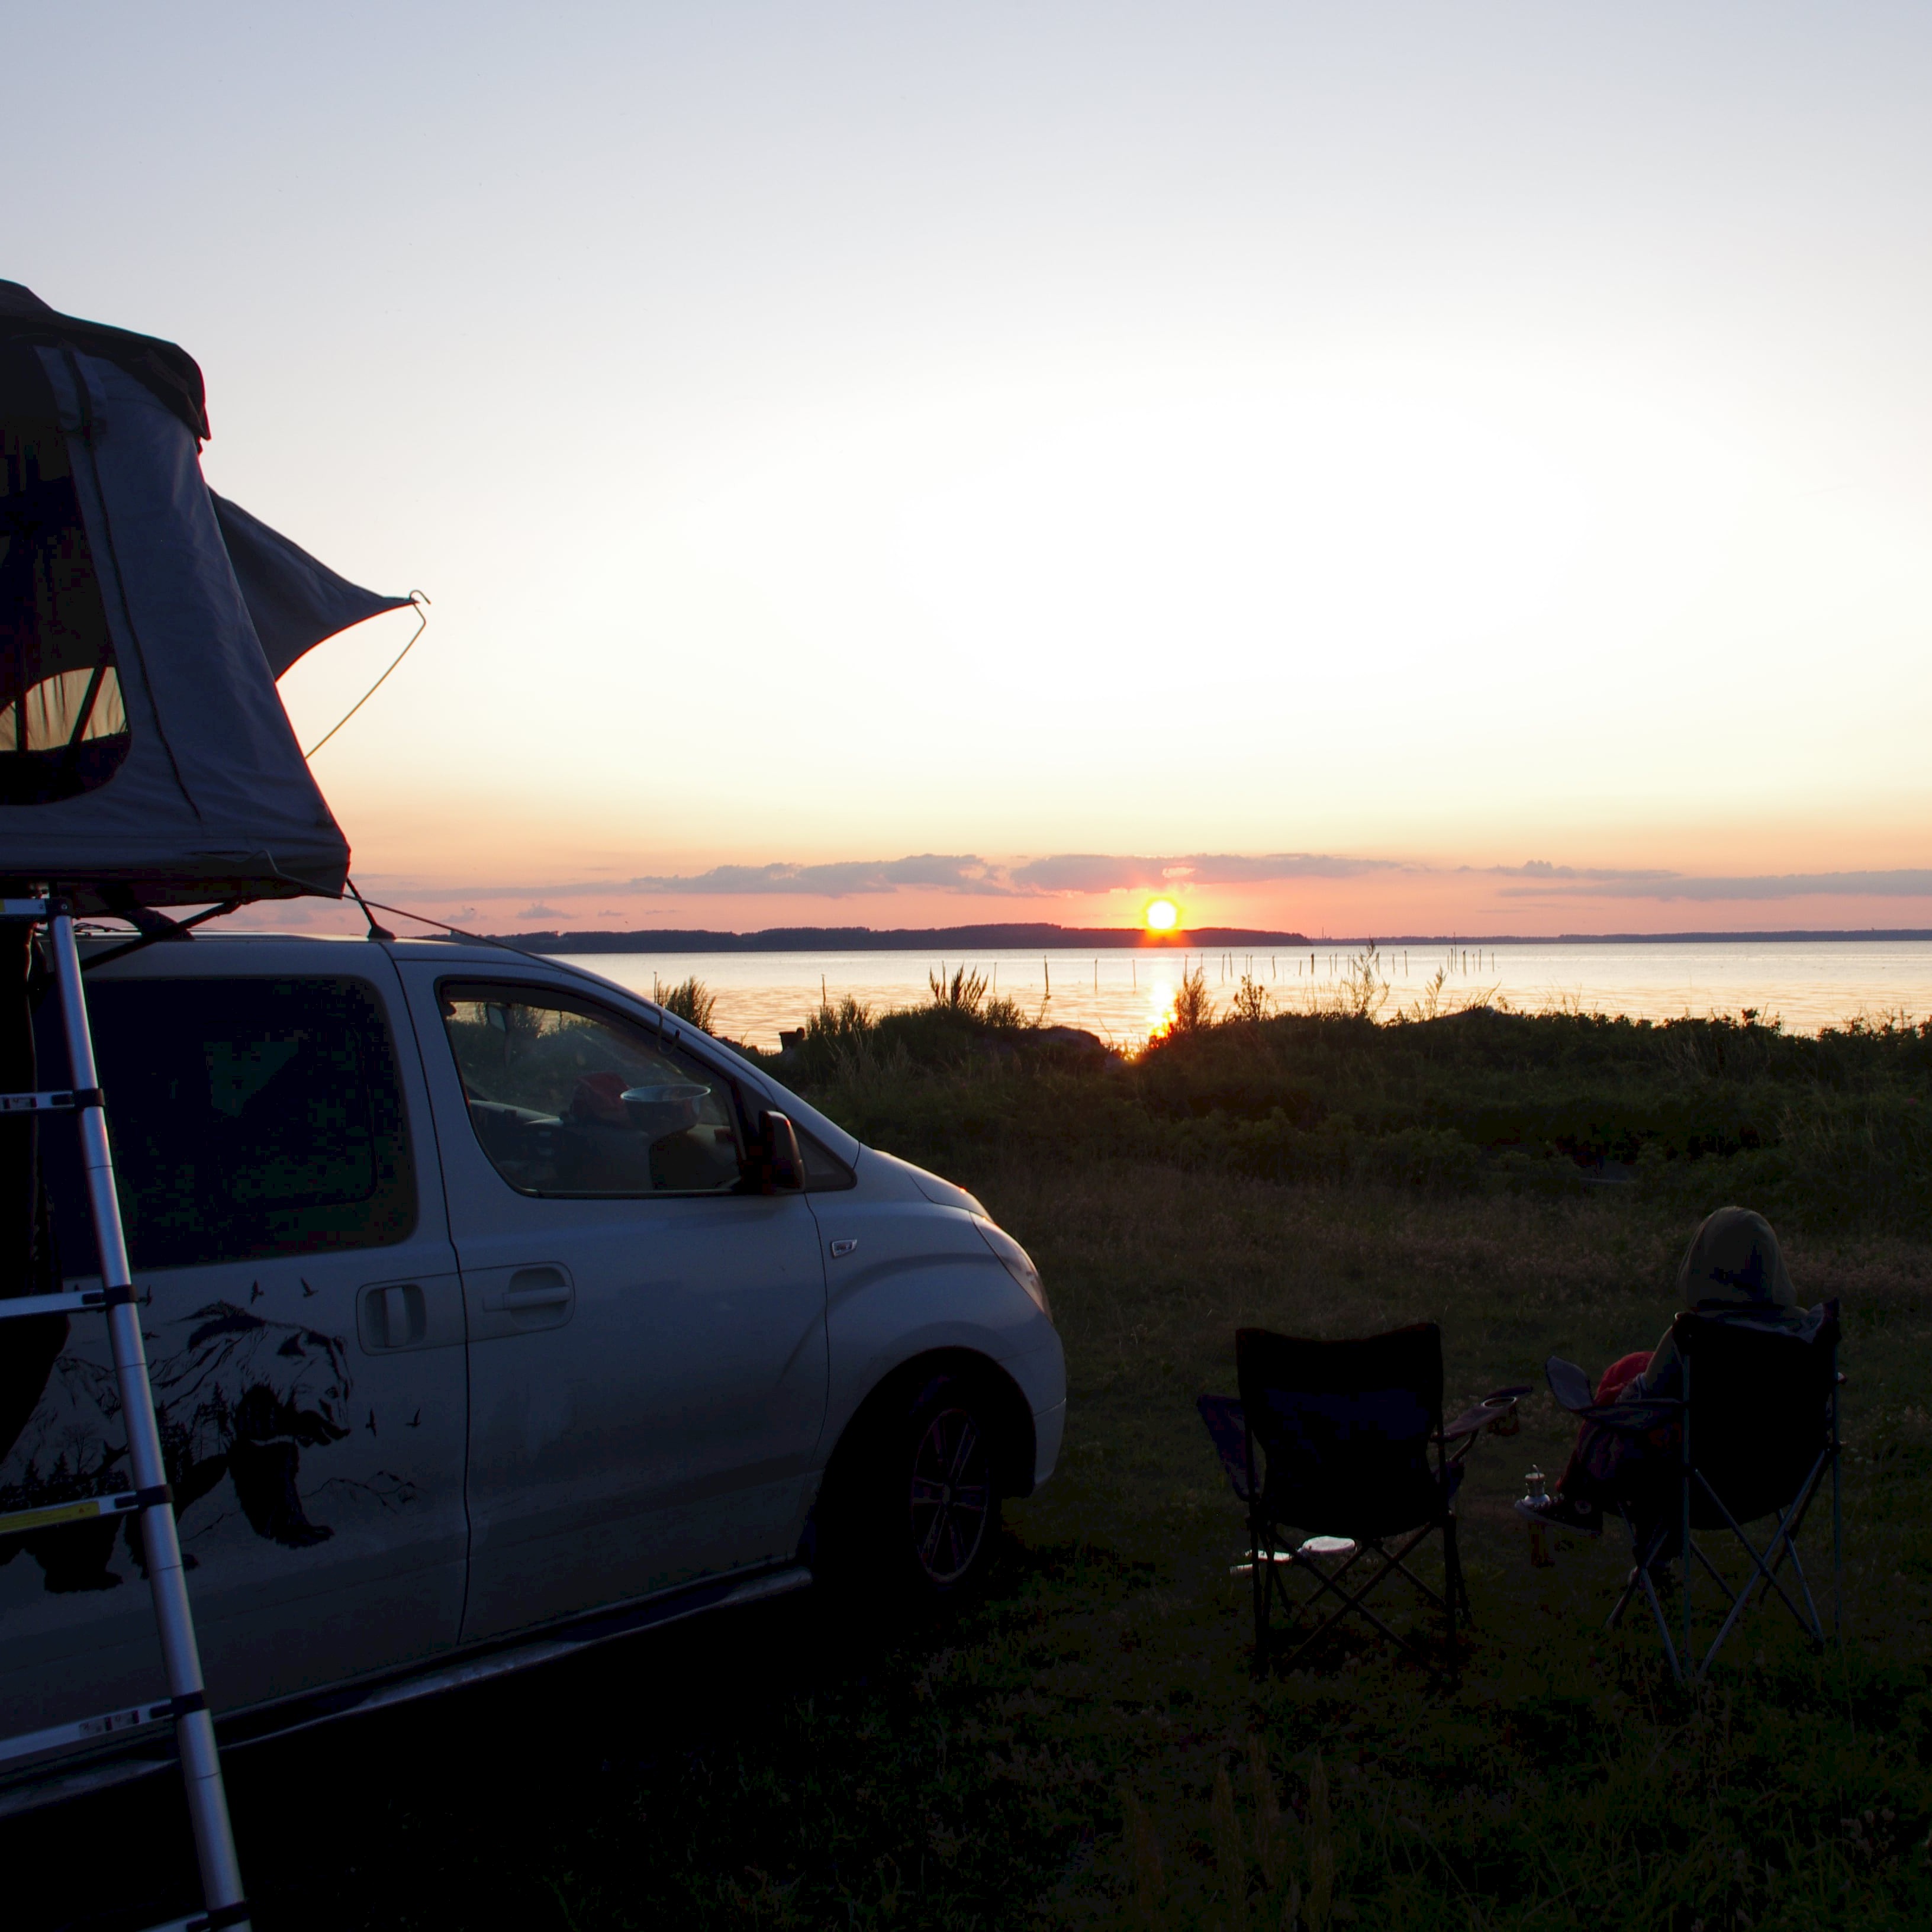 Wild camping at sunset